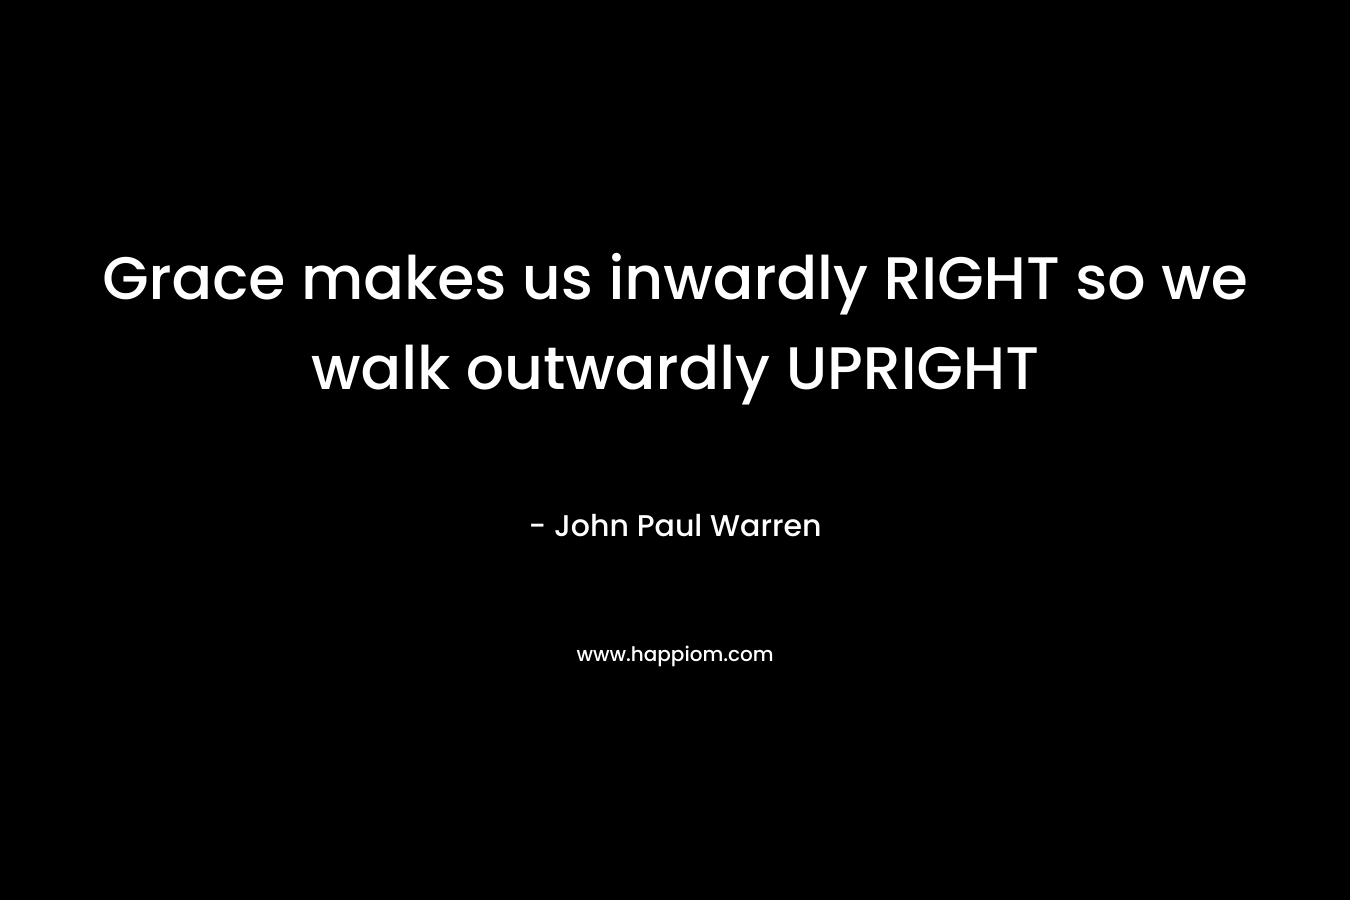 Grace makes us inwardly RIGHT so we walk outwardly UPRIGHT